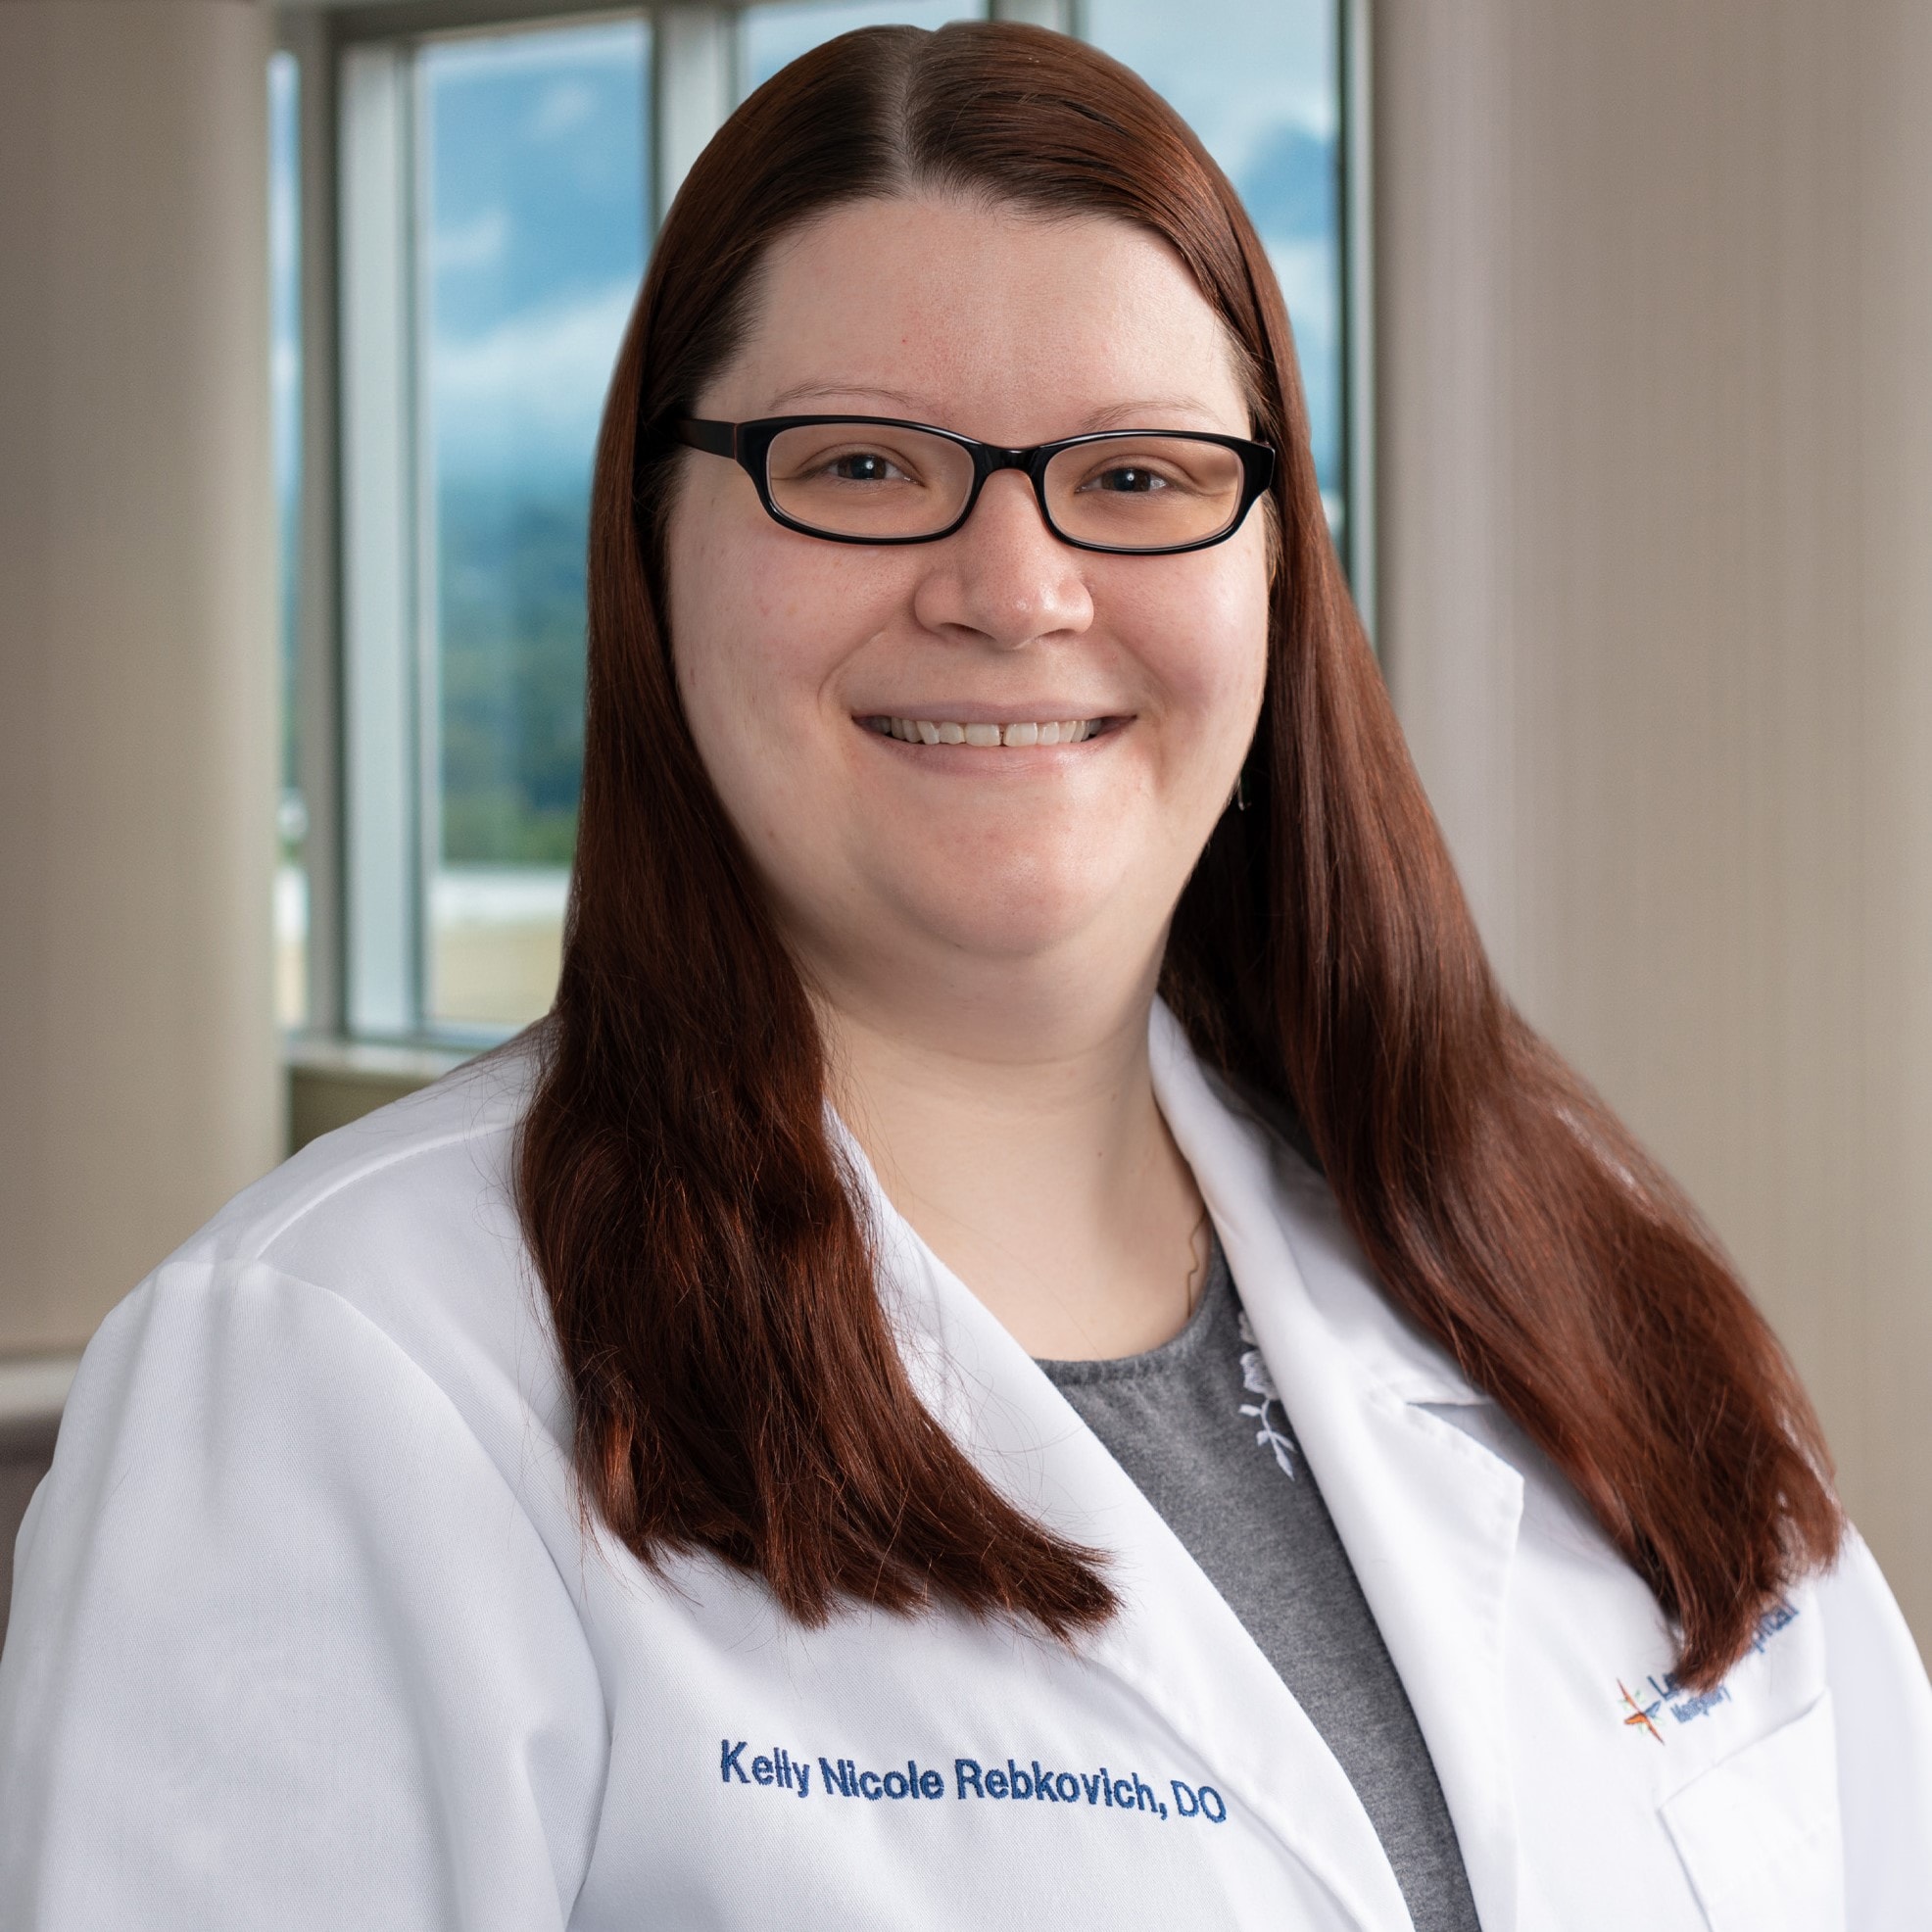 Dr. Kelly Nicole Rebkovich